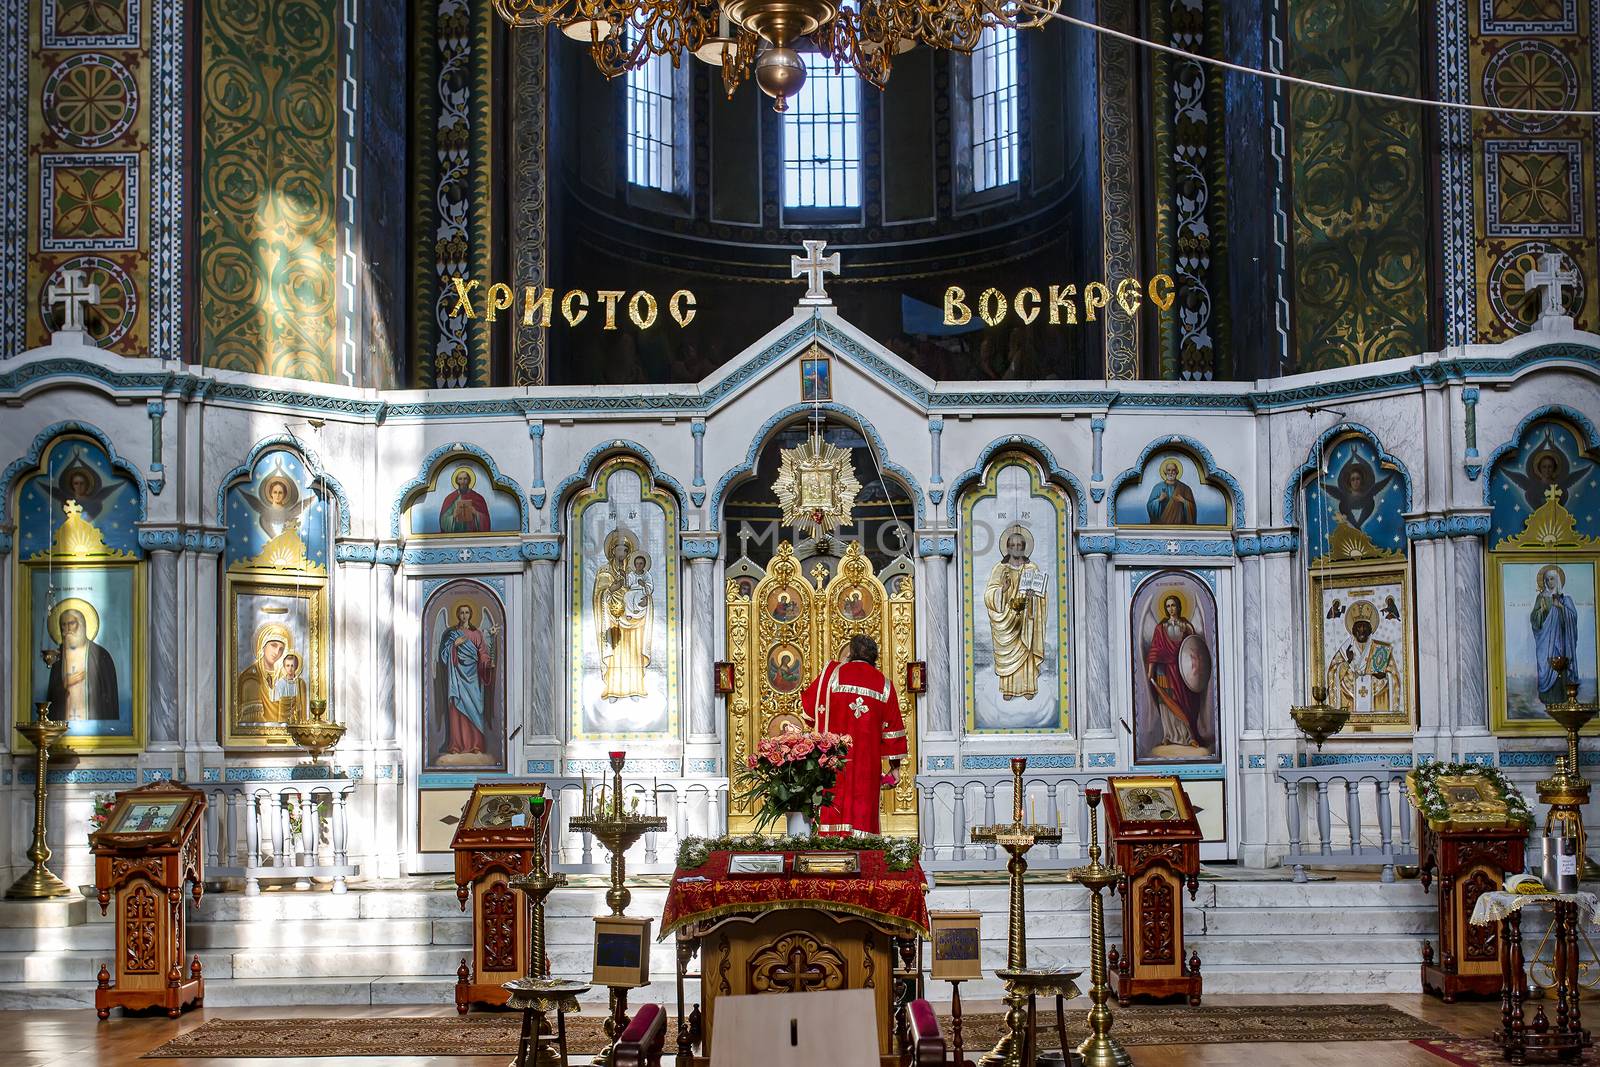 Orthodox Christian church inside. Easter. 01.05.2018 Glukhov Ukraine by 977_ReX_977